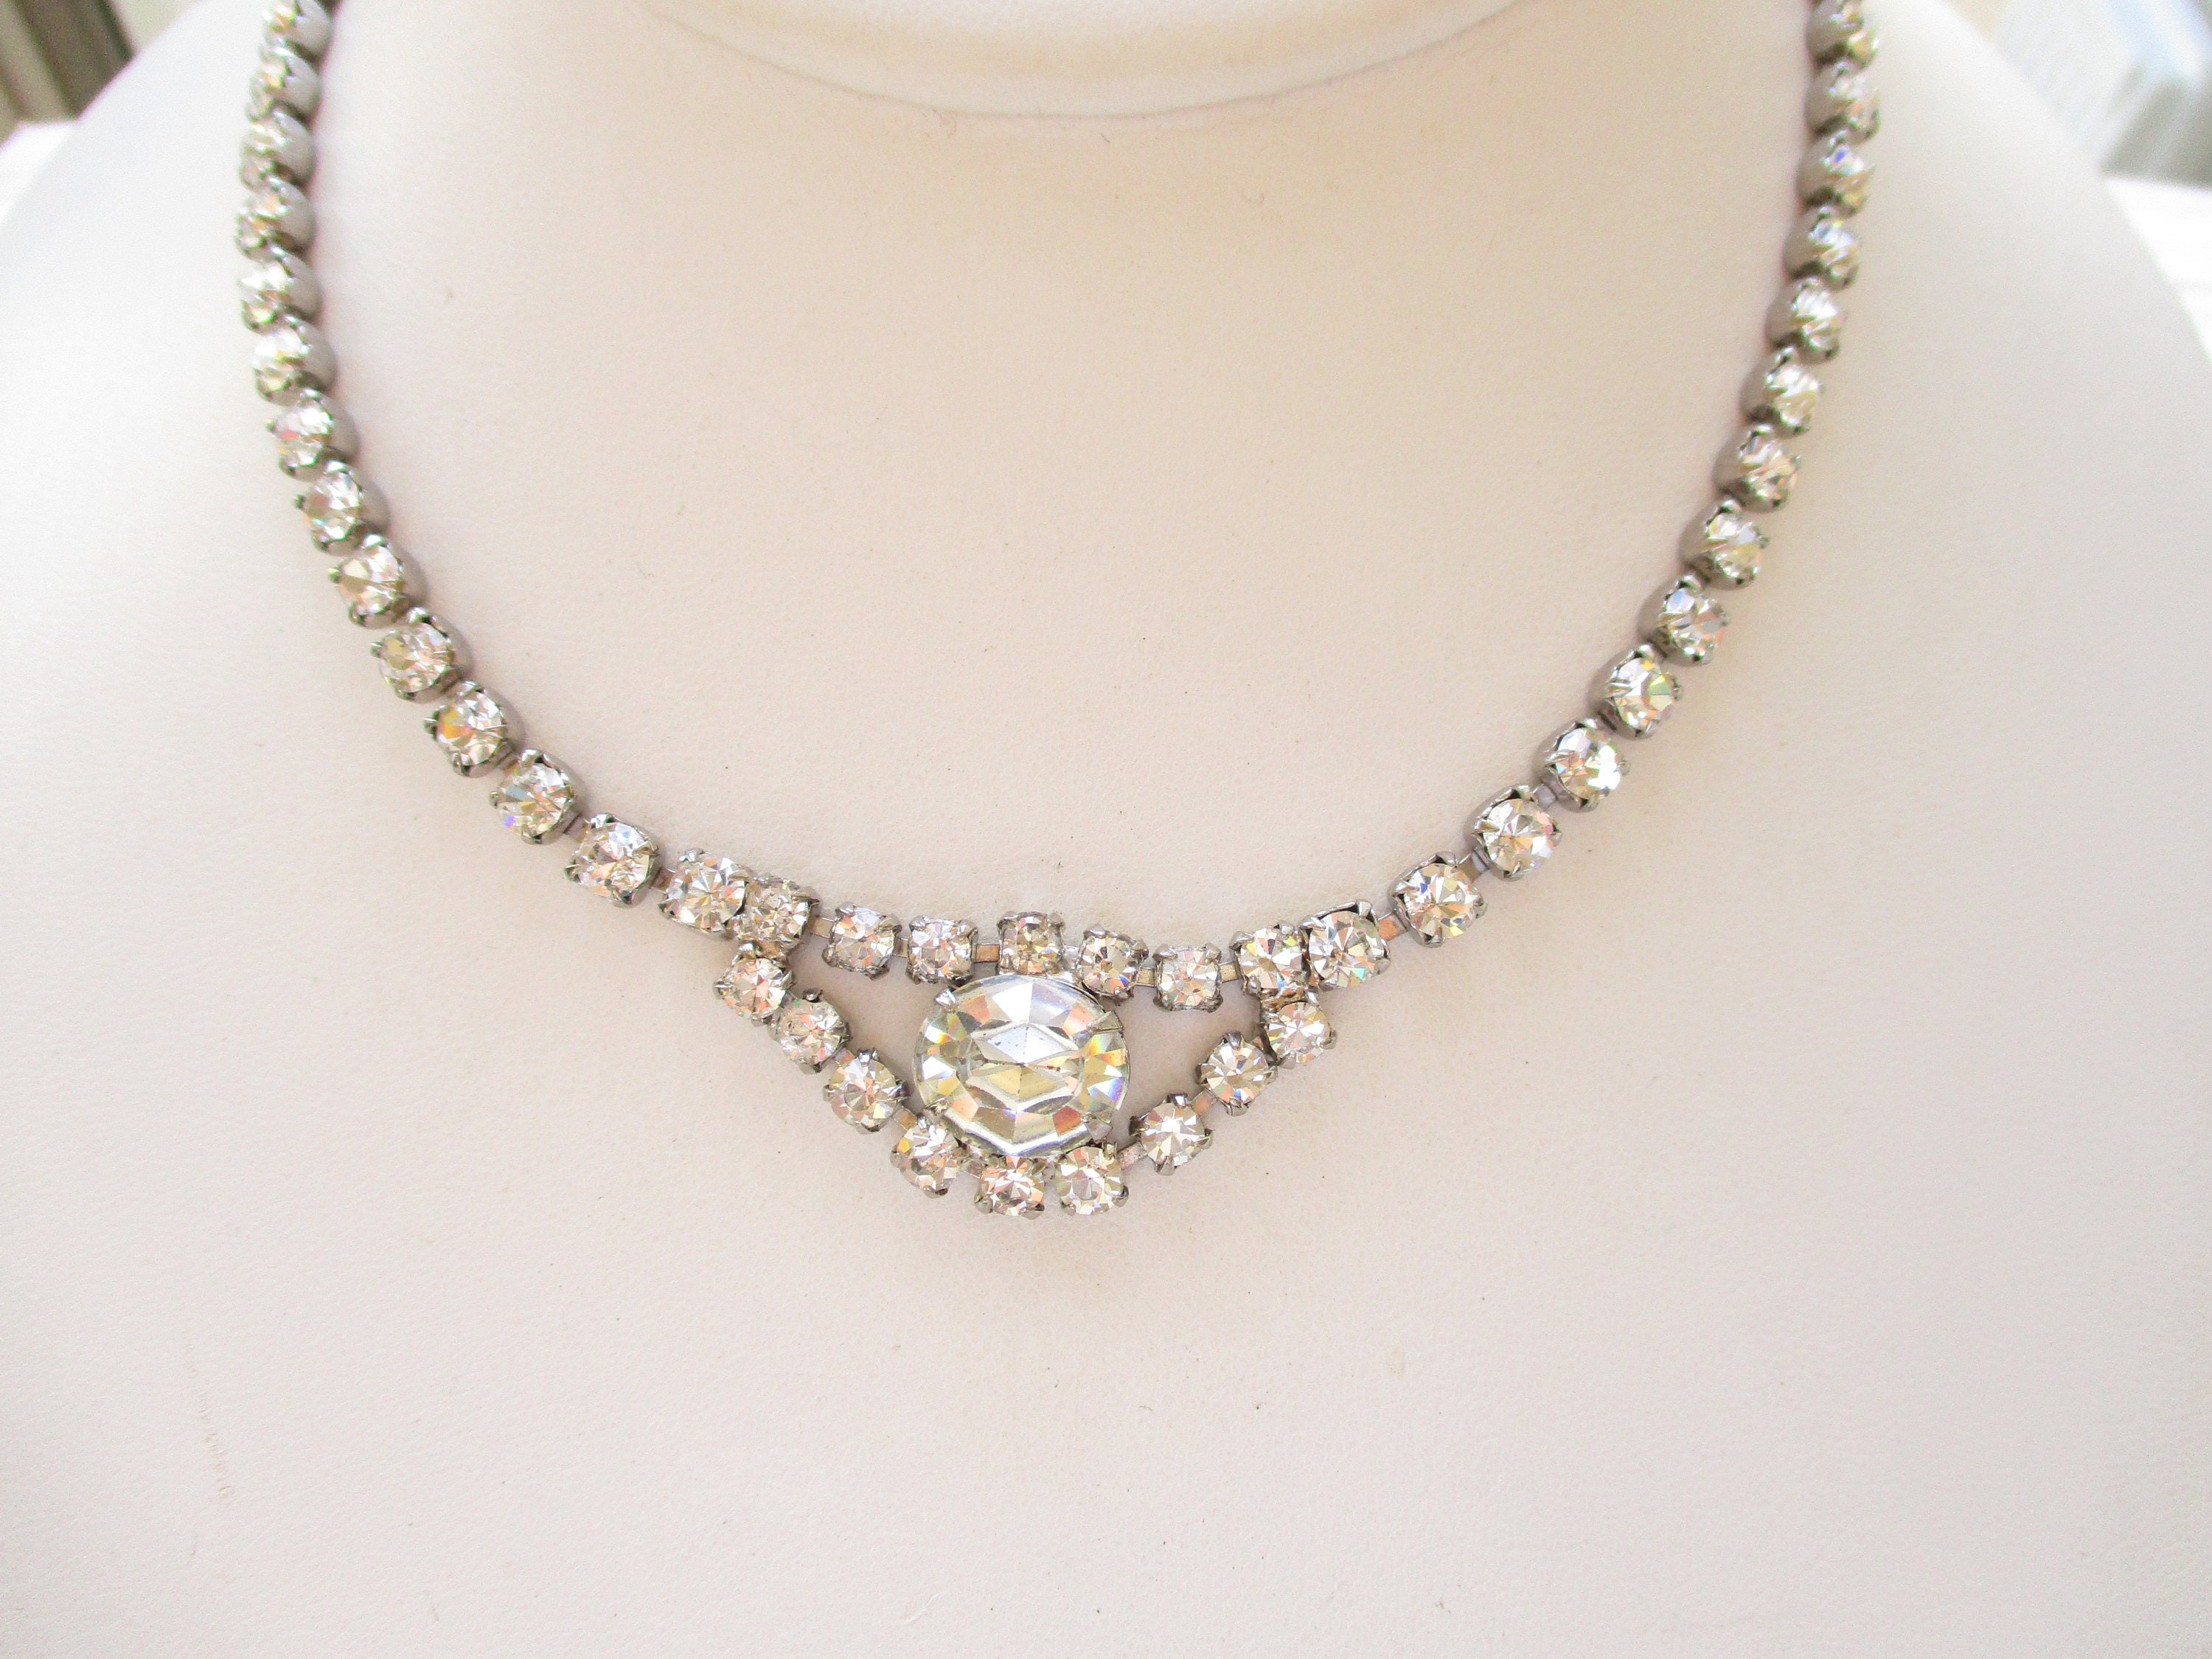 Vinatge Silver Tone Necklace With Rhinestone crystals